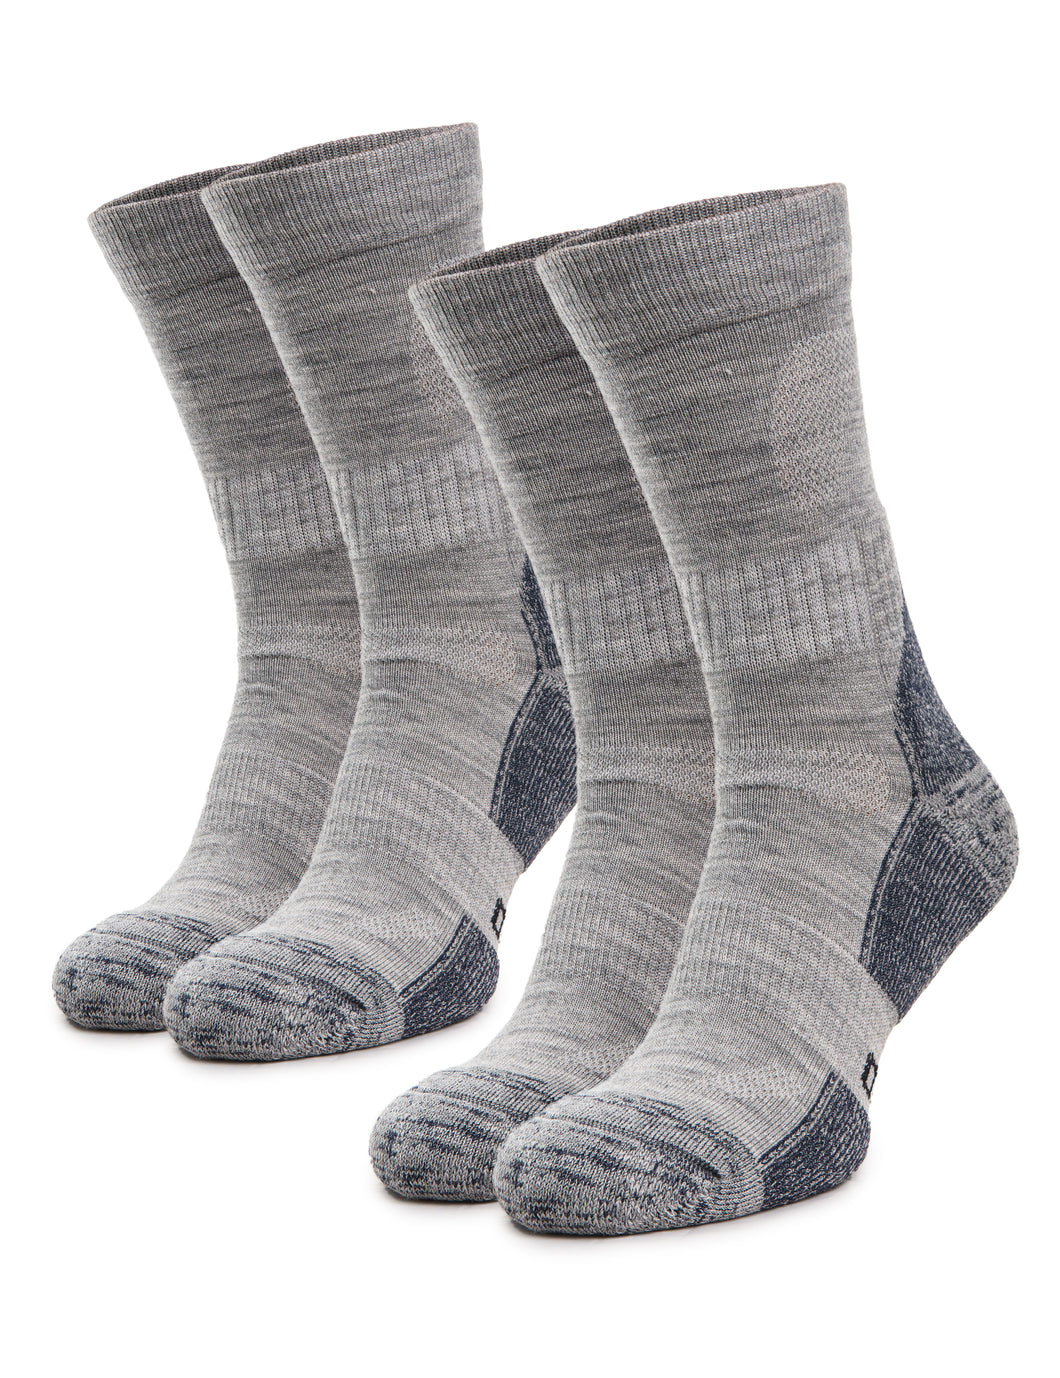 Merino Wool Hiking Socks - (Pack of 2) Asphalt